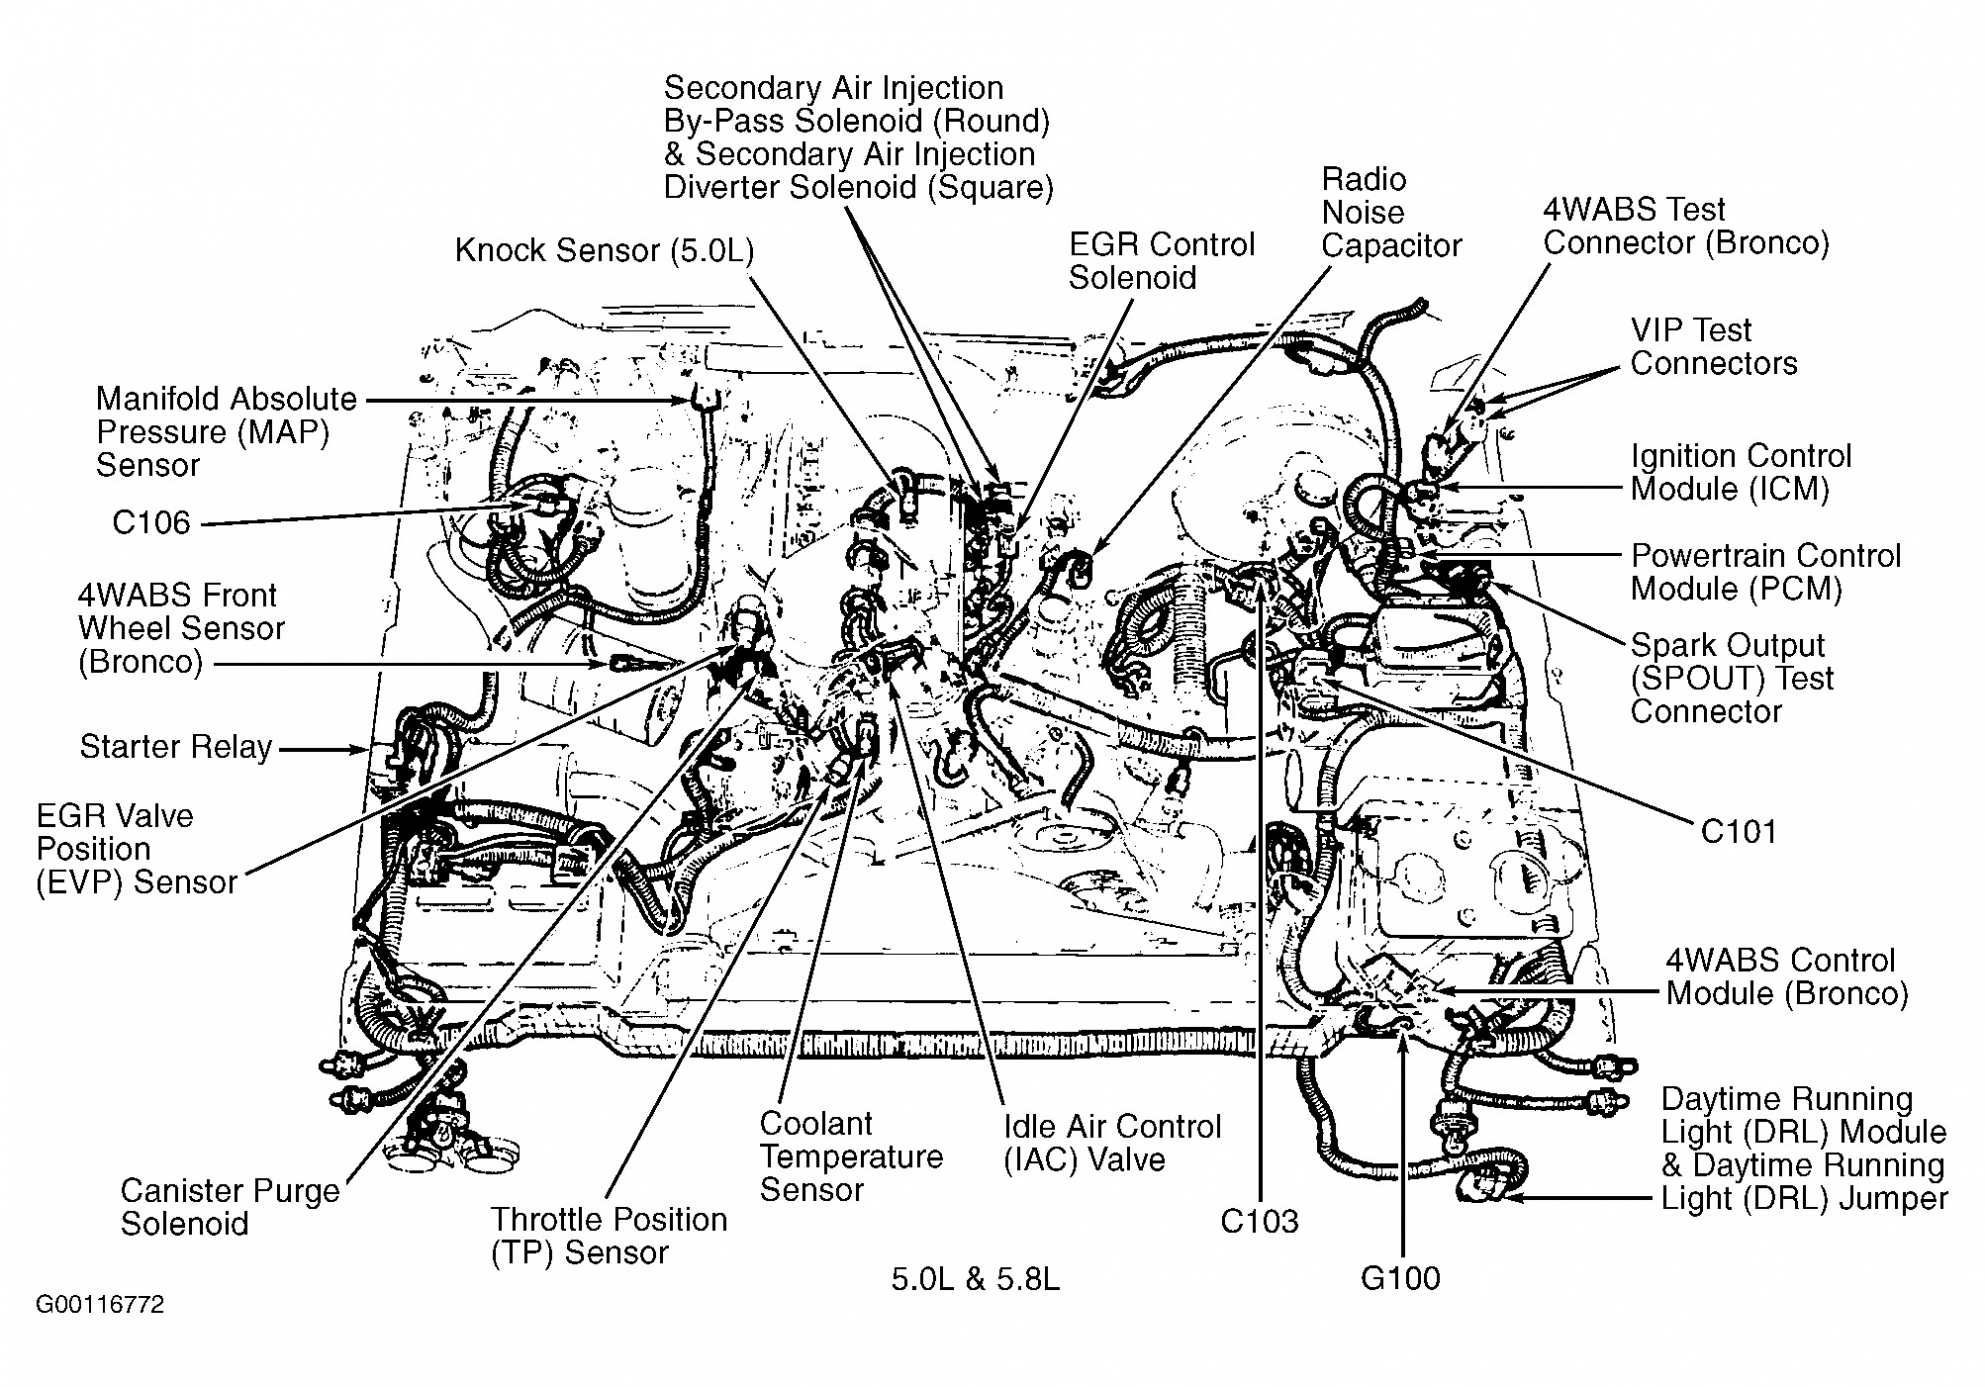 Diagram] 1999 Ford Explorer Ohv Engine Diagram Full Version